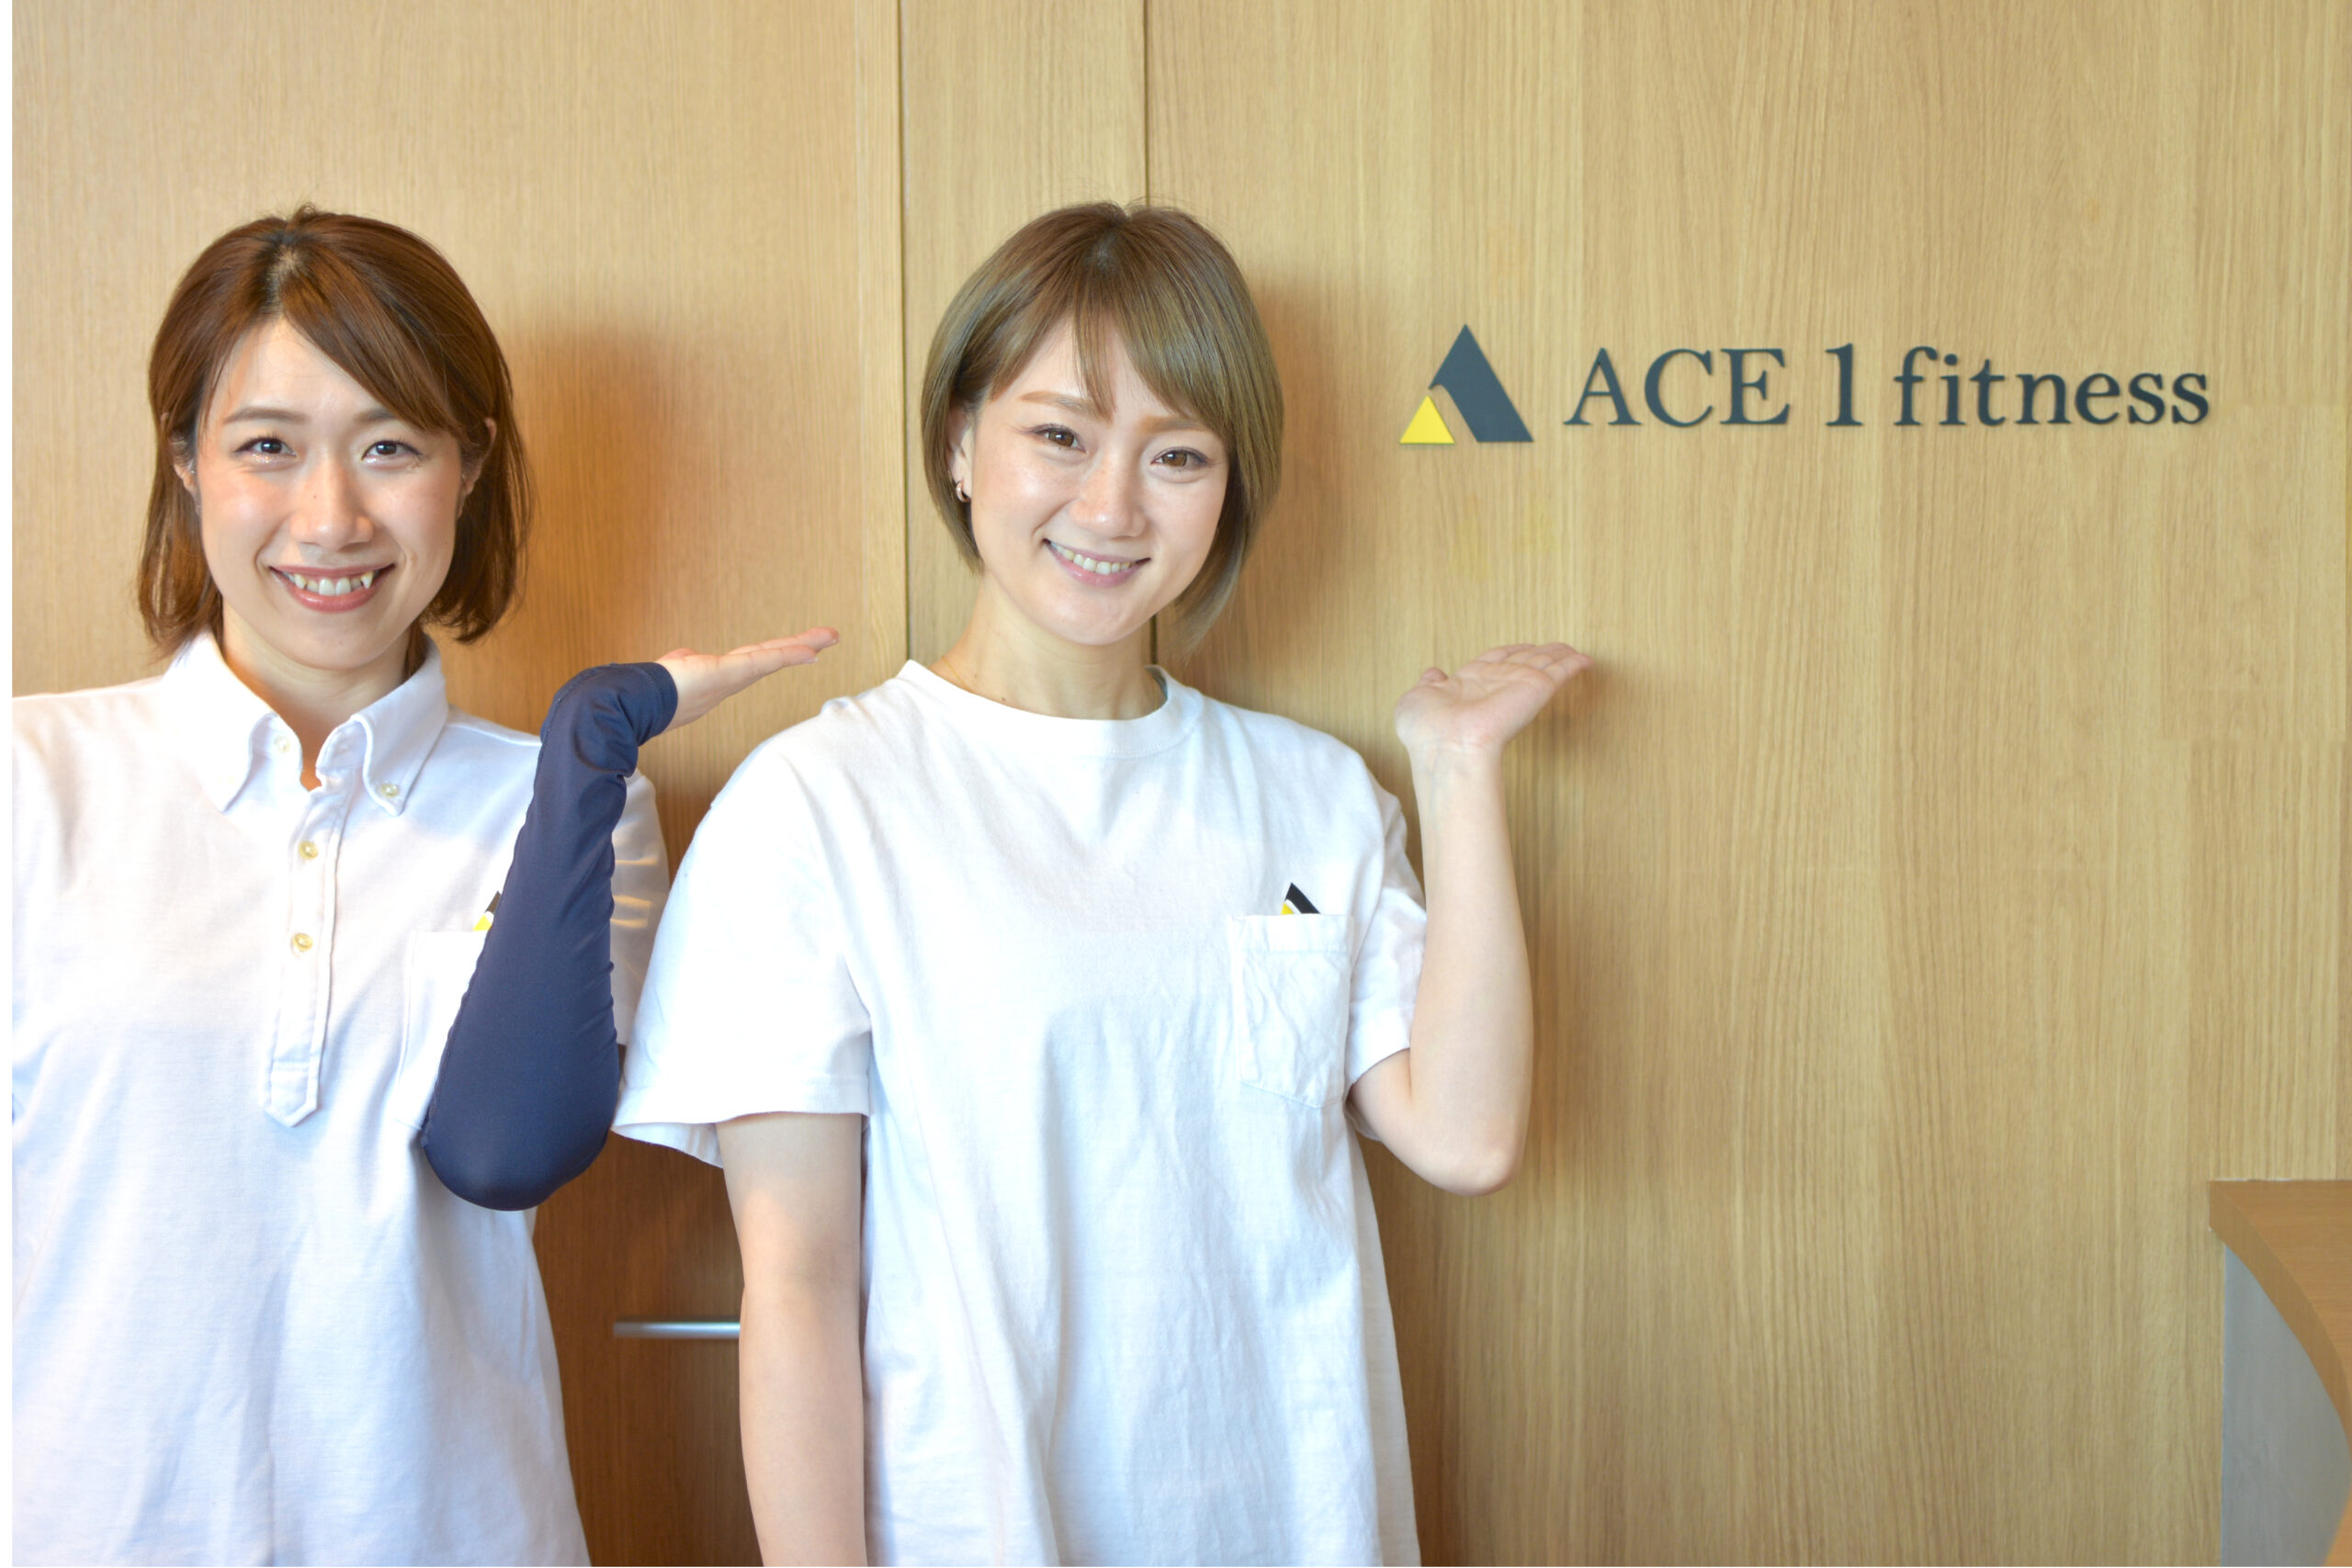 ACE1fitnessのトレーナーは 個性の塊です！一緒に楽しくトレーニングしましょう！！！page-visual ACE1fitnessのトレーナーは 個性の塊です！一緒に楽しくトレーニングしましょう！！！ビジュアル